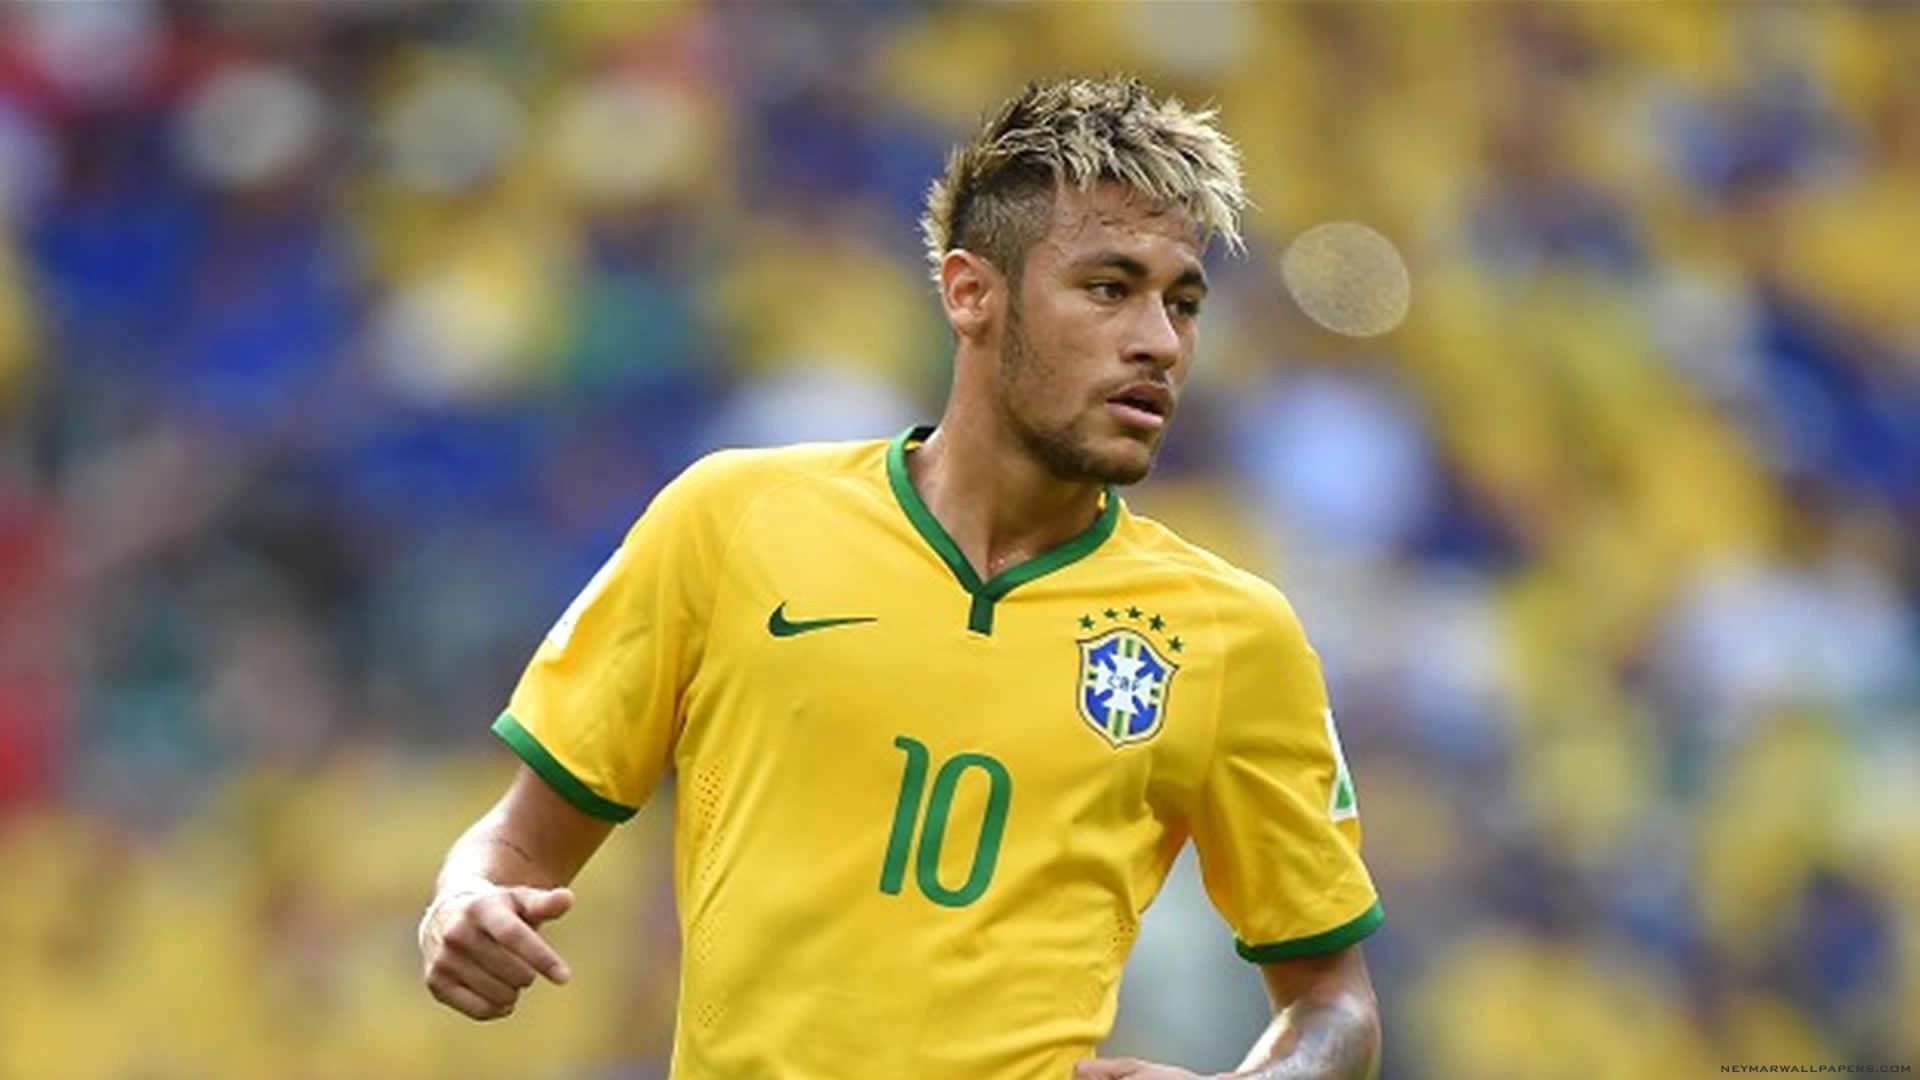 neymar-wallpaper-new-neymar-brazil-wallpaper-5-neymar-wallpapers-of-neymar-wallpaper-99b083a06ee6b850bd016beb86fb4088.jpg